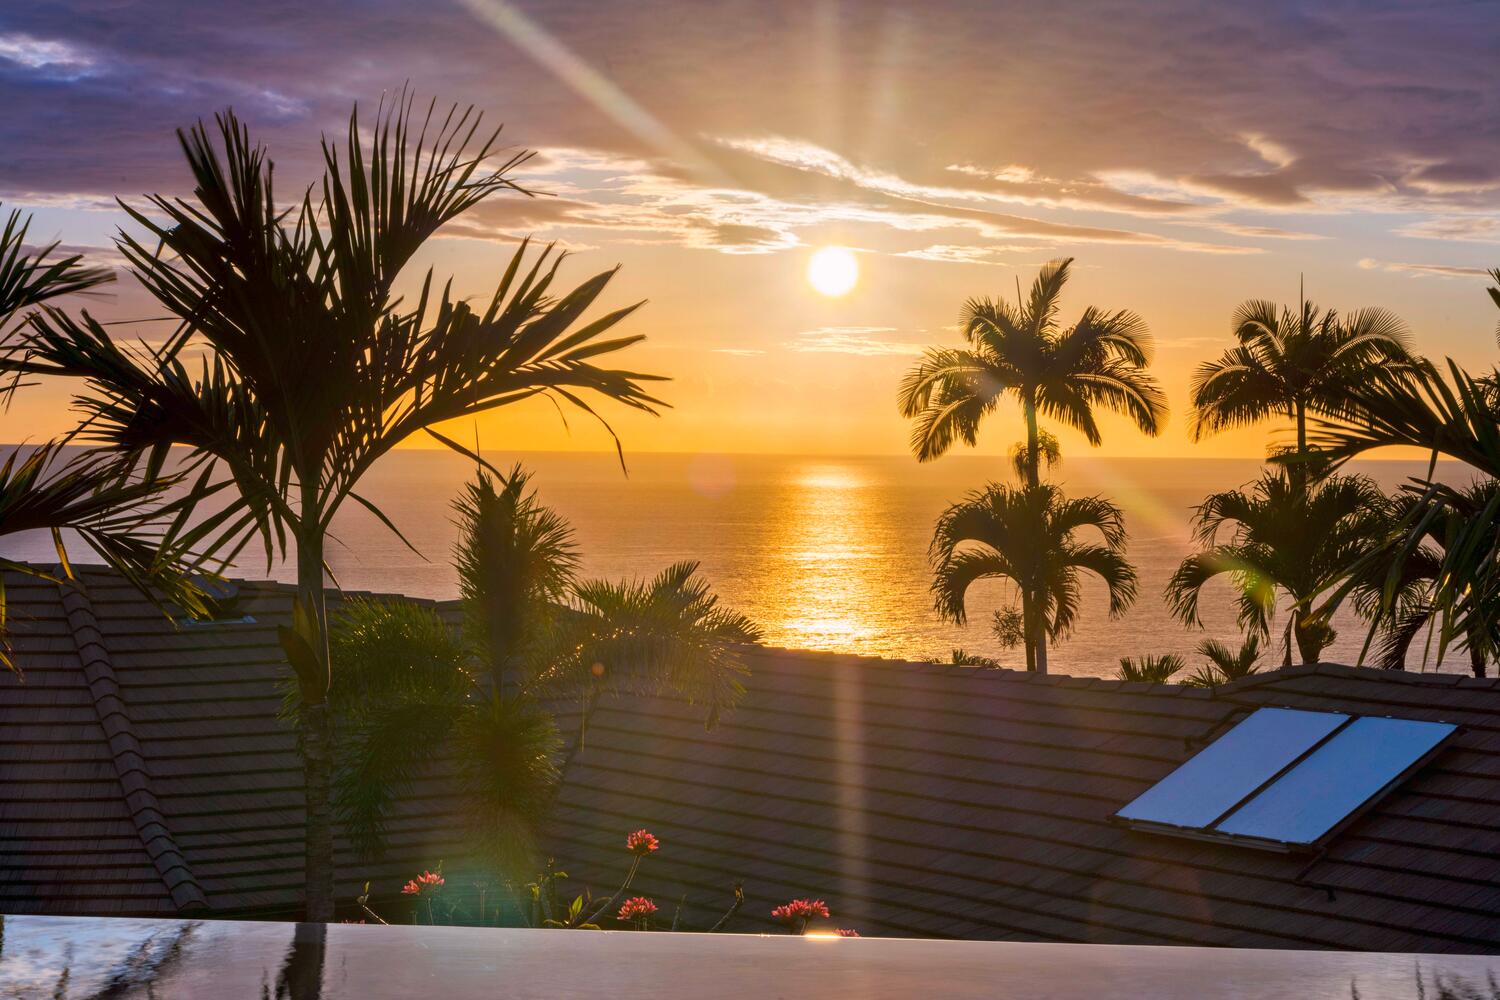 Kailua Kona Vacation Rentals, Blue Hawaii - Hello sunshine!